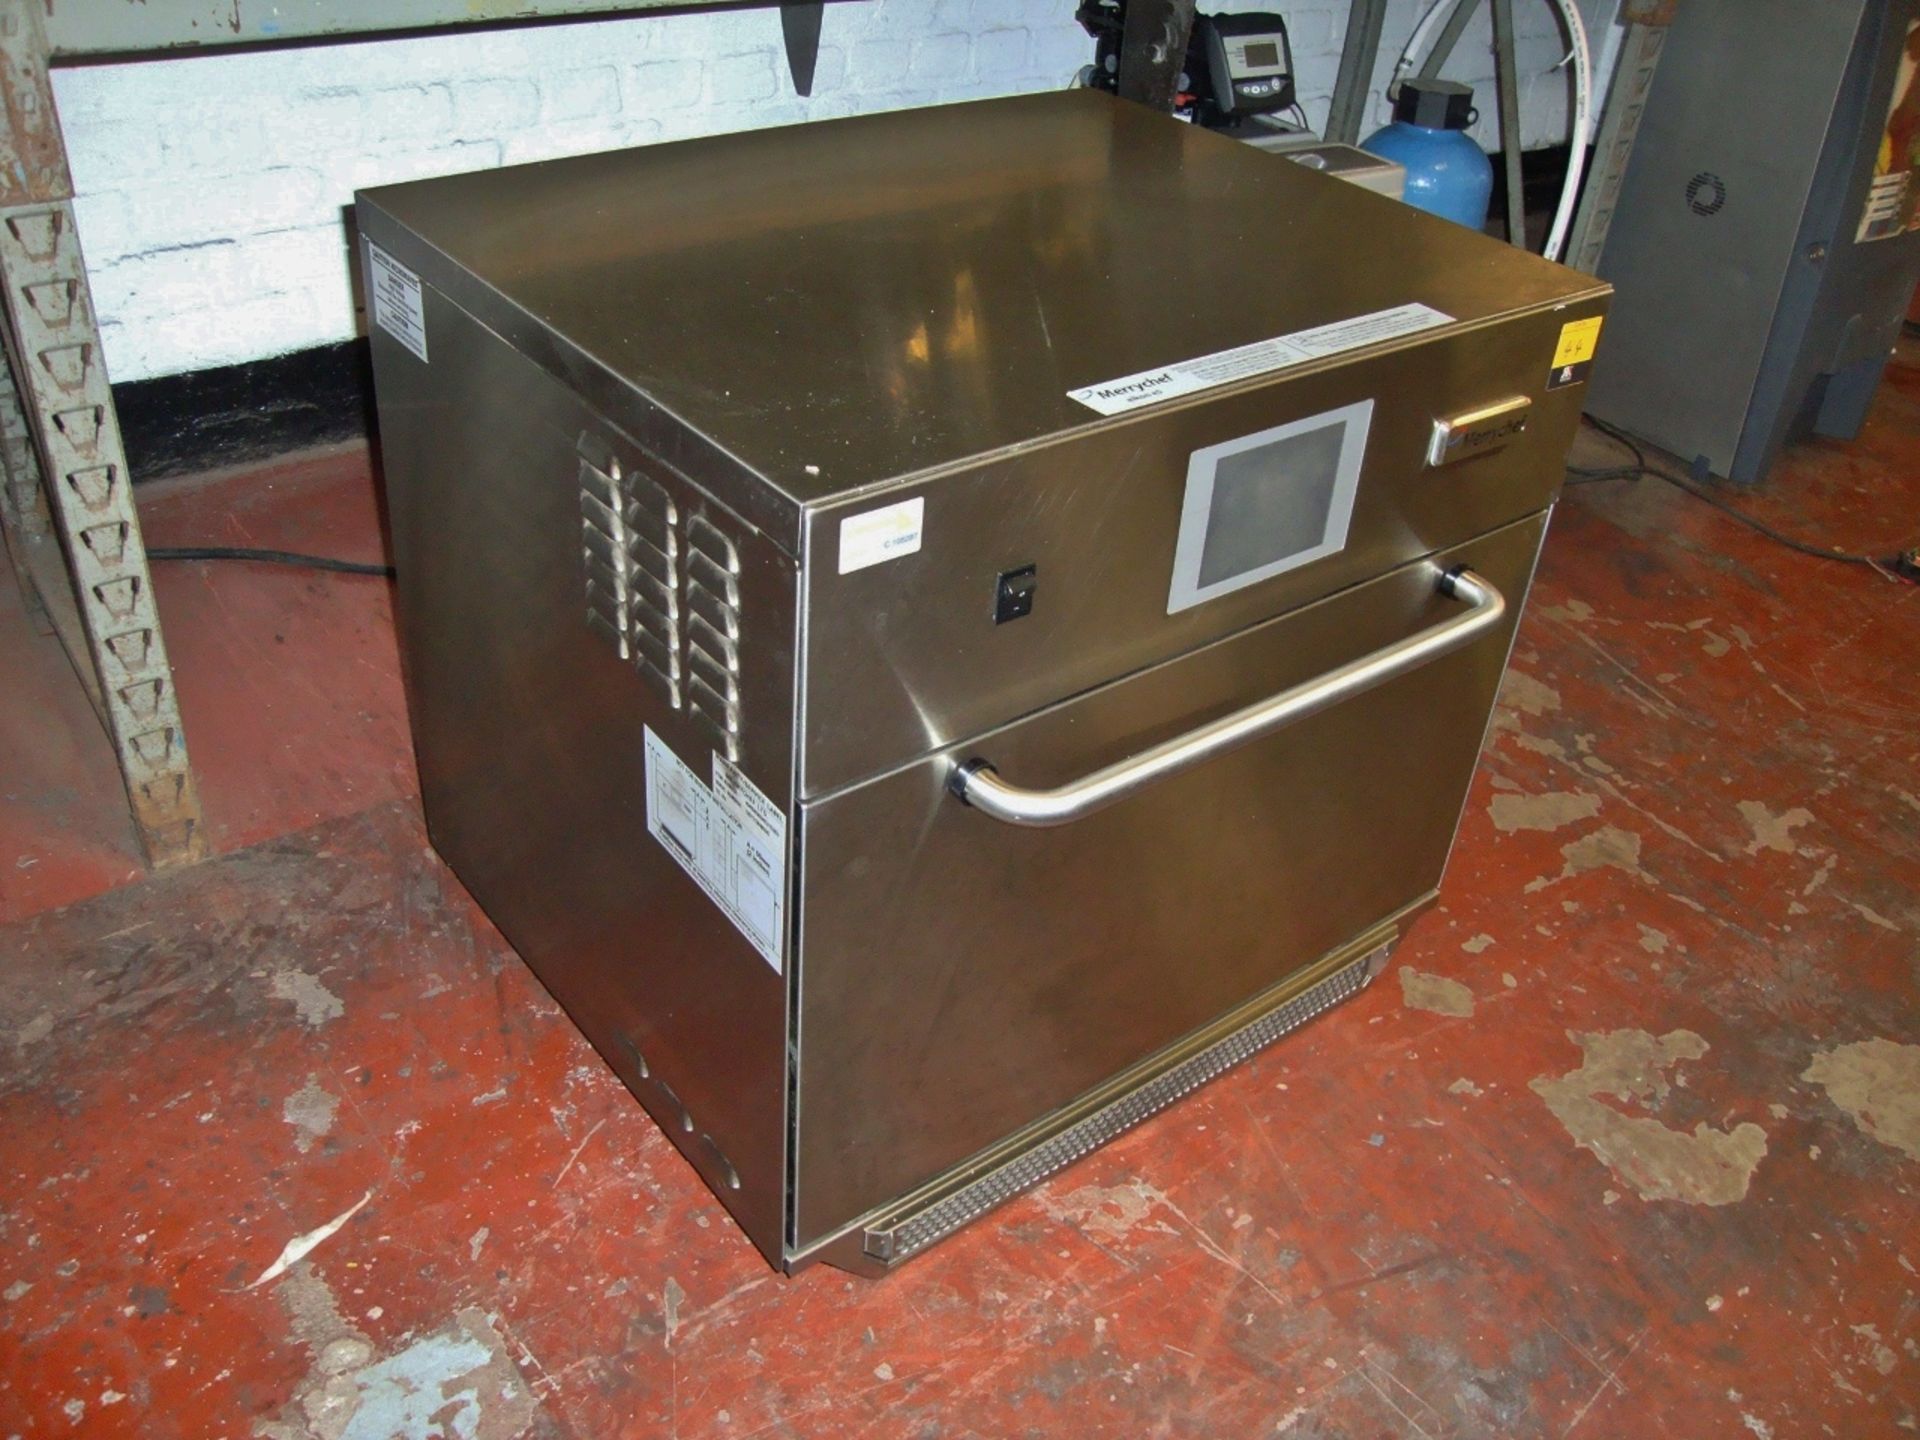 Merrychef Eikon e5 commercial multifunction oven item no. E5NSW305HEU1ESEU, s/n 1207213090285